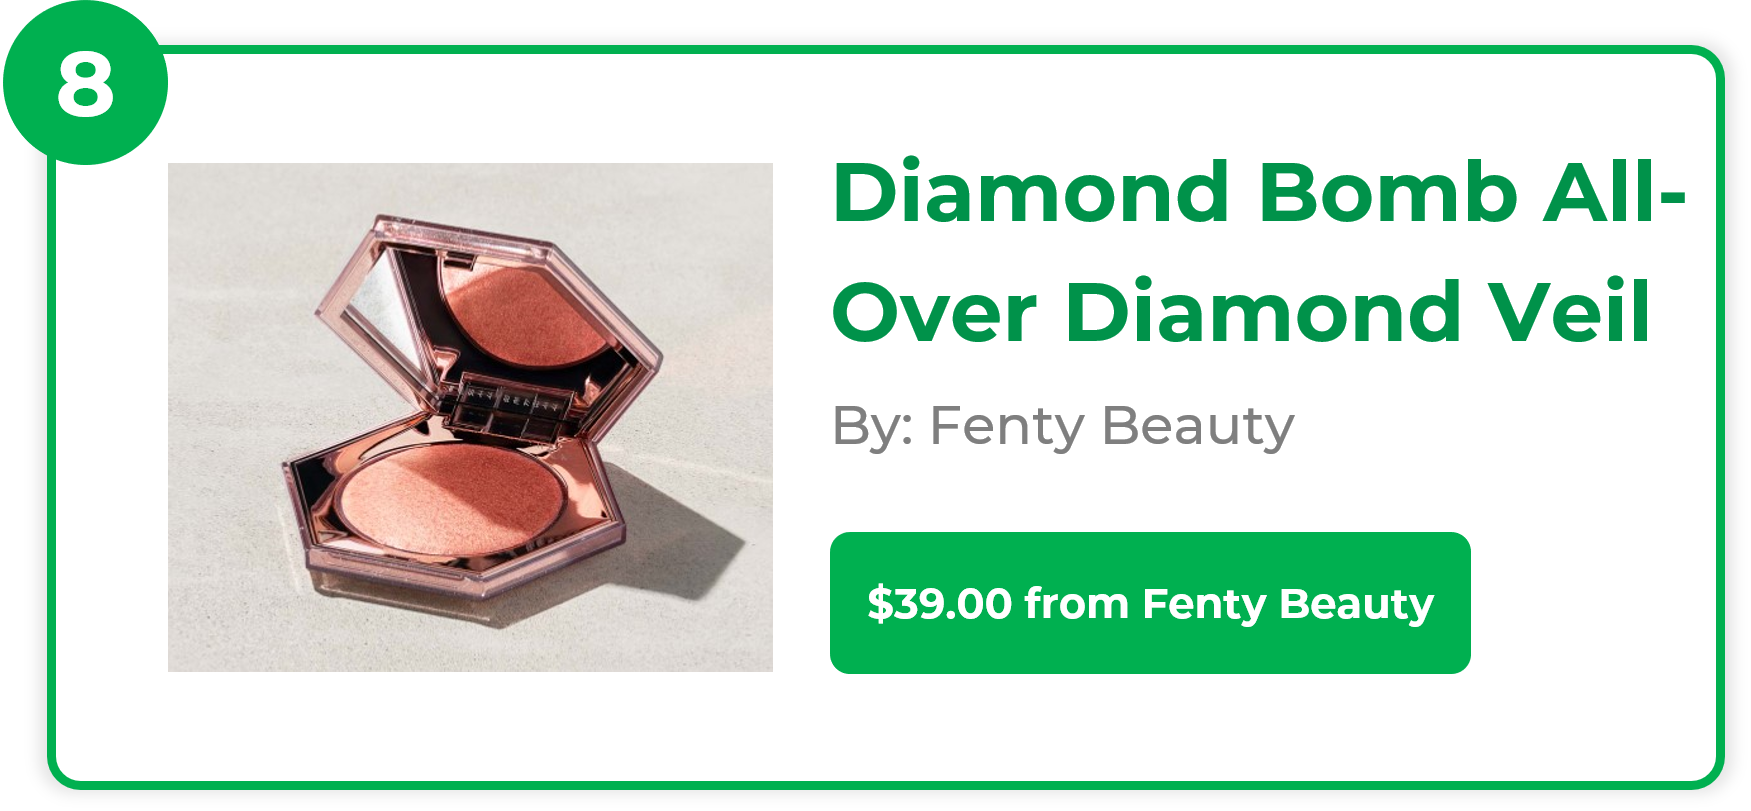 Diamond Bomb All-Over Diamond Veil - Fenty Beauty